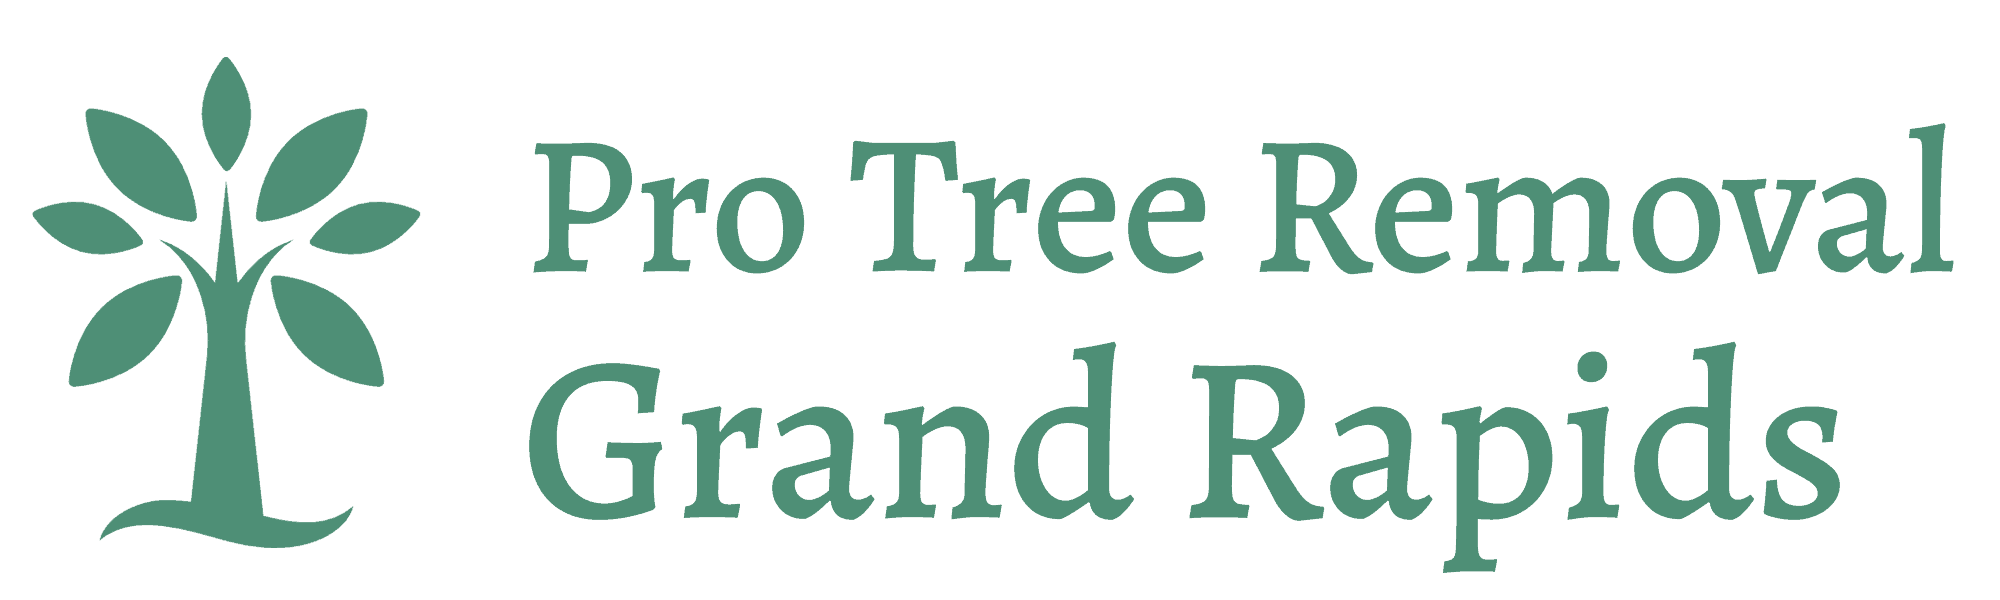 Pro Tree Removal Grand Rapids Logo